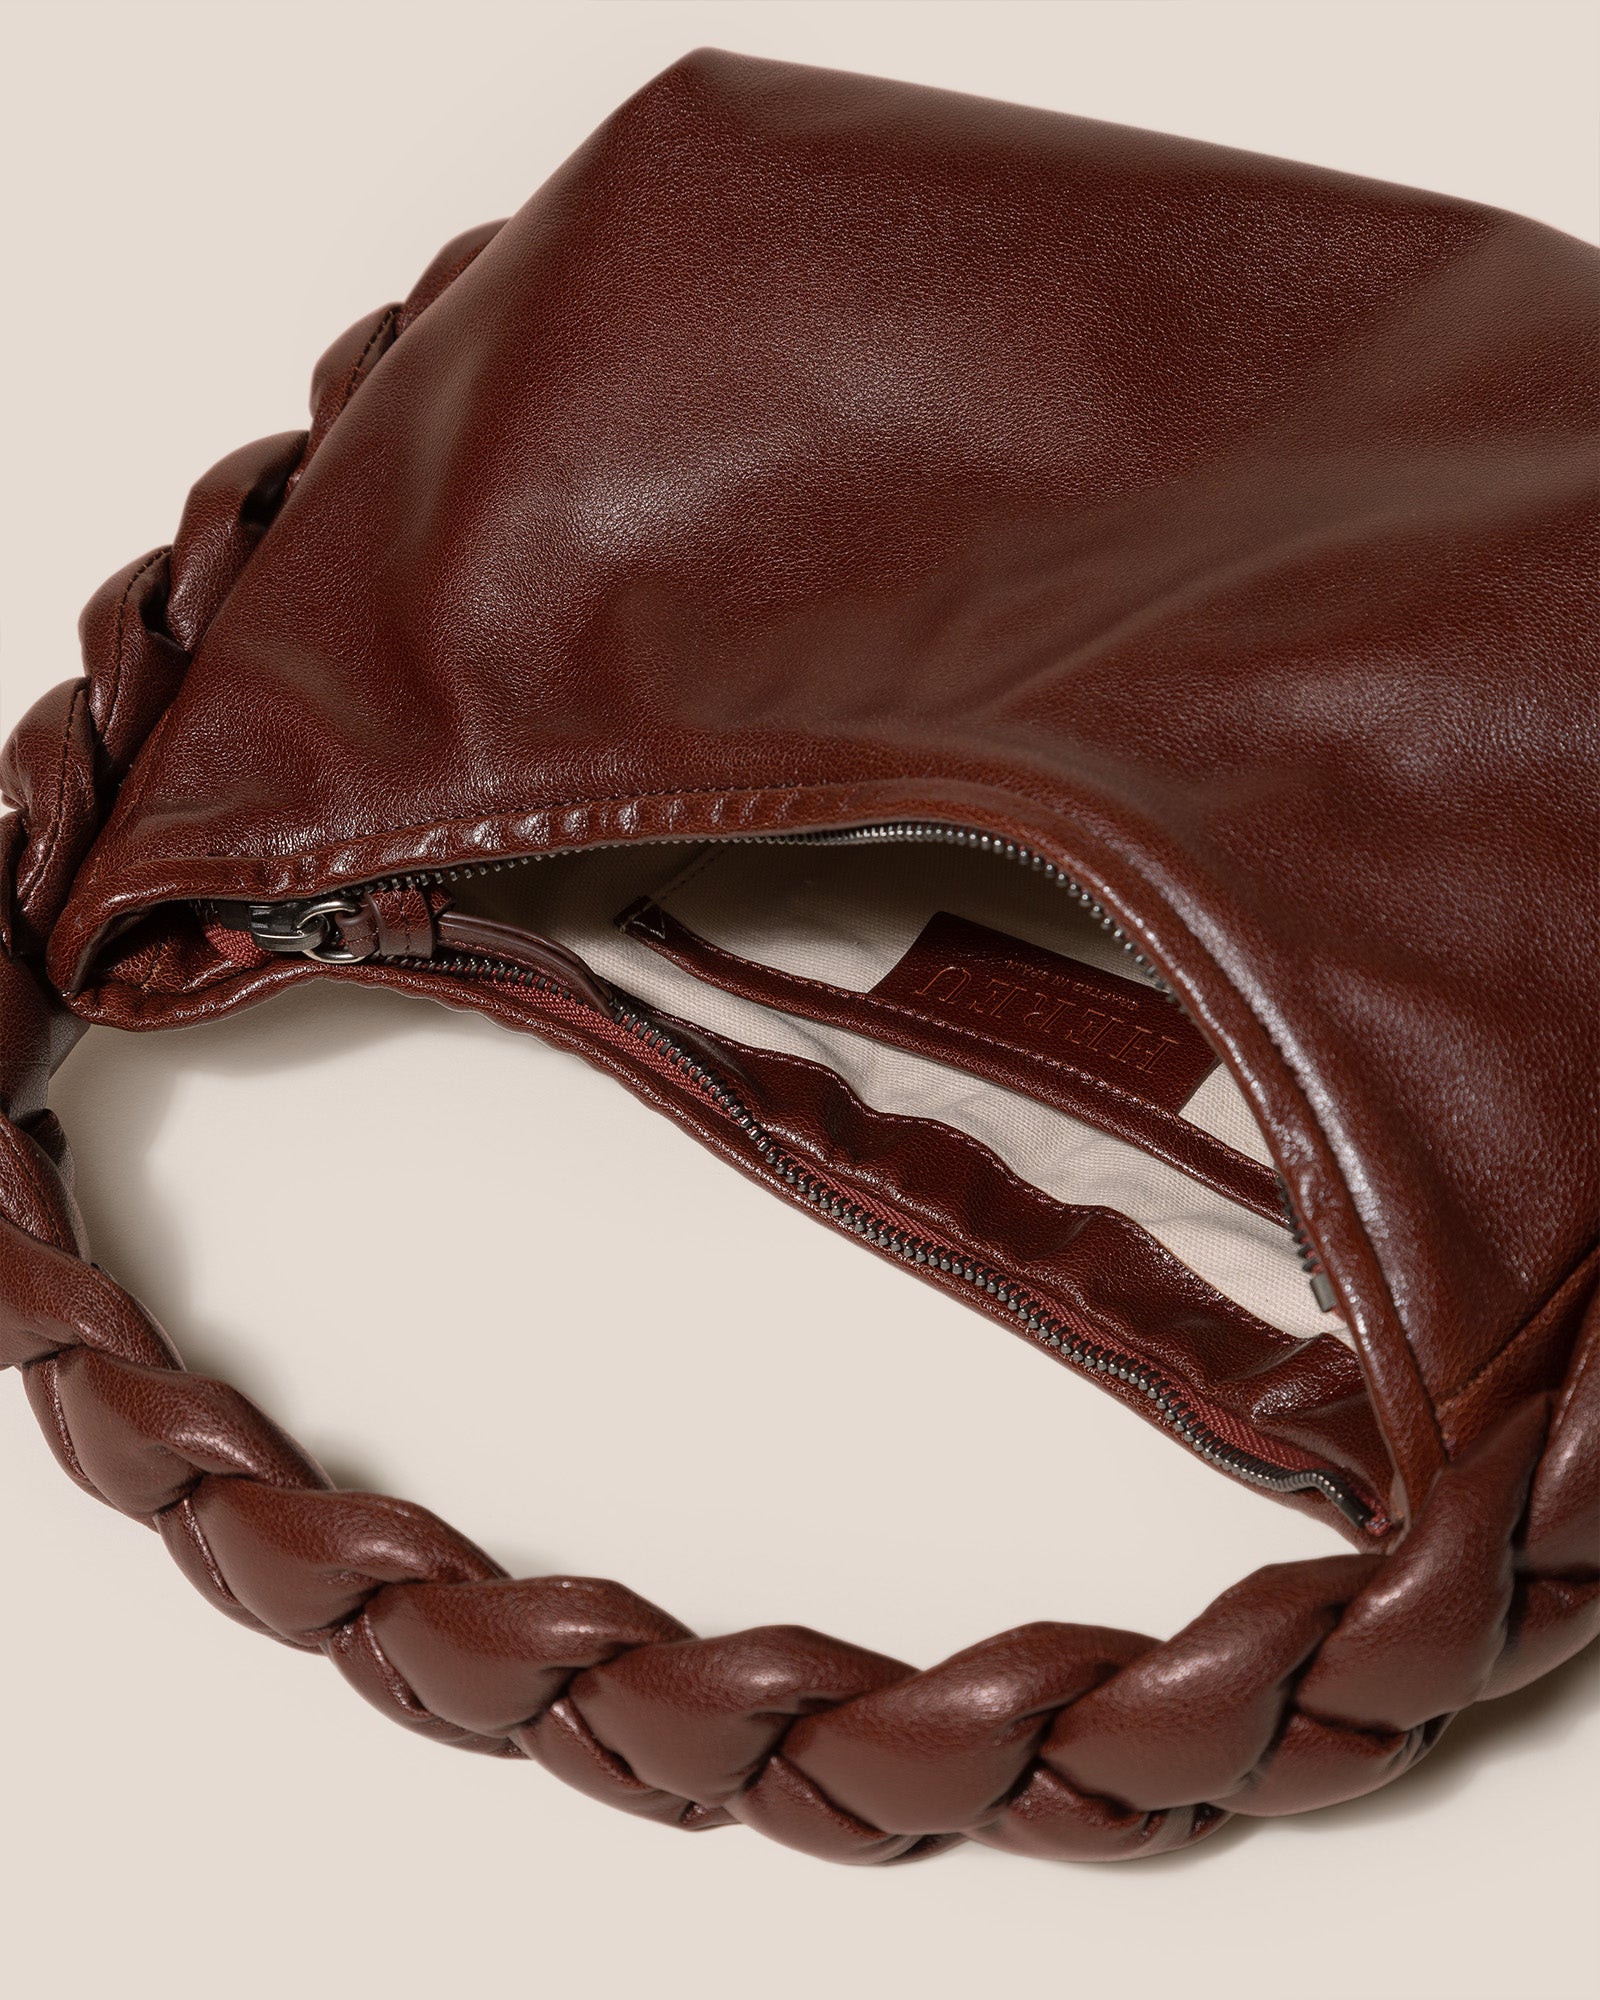 Espiga braided handle leather handbag by Hereu